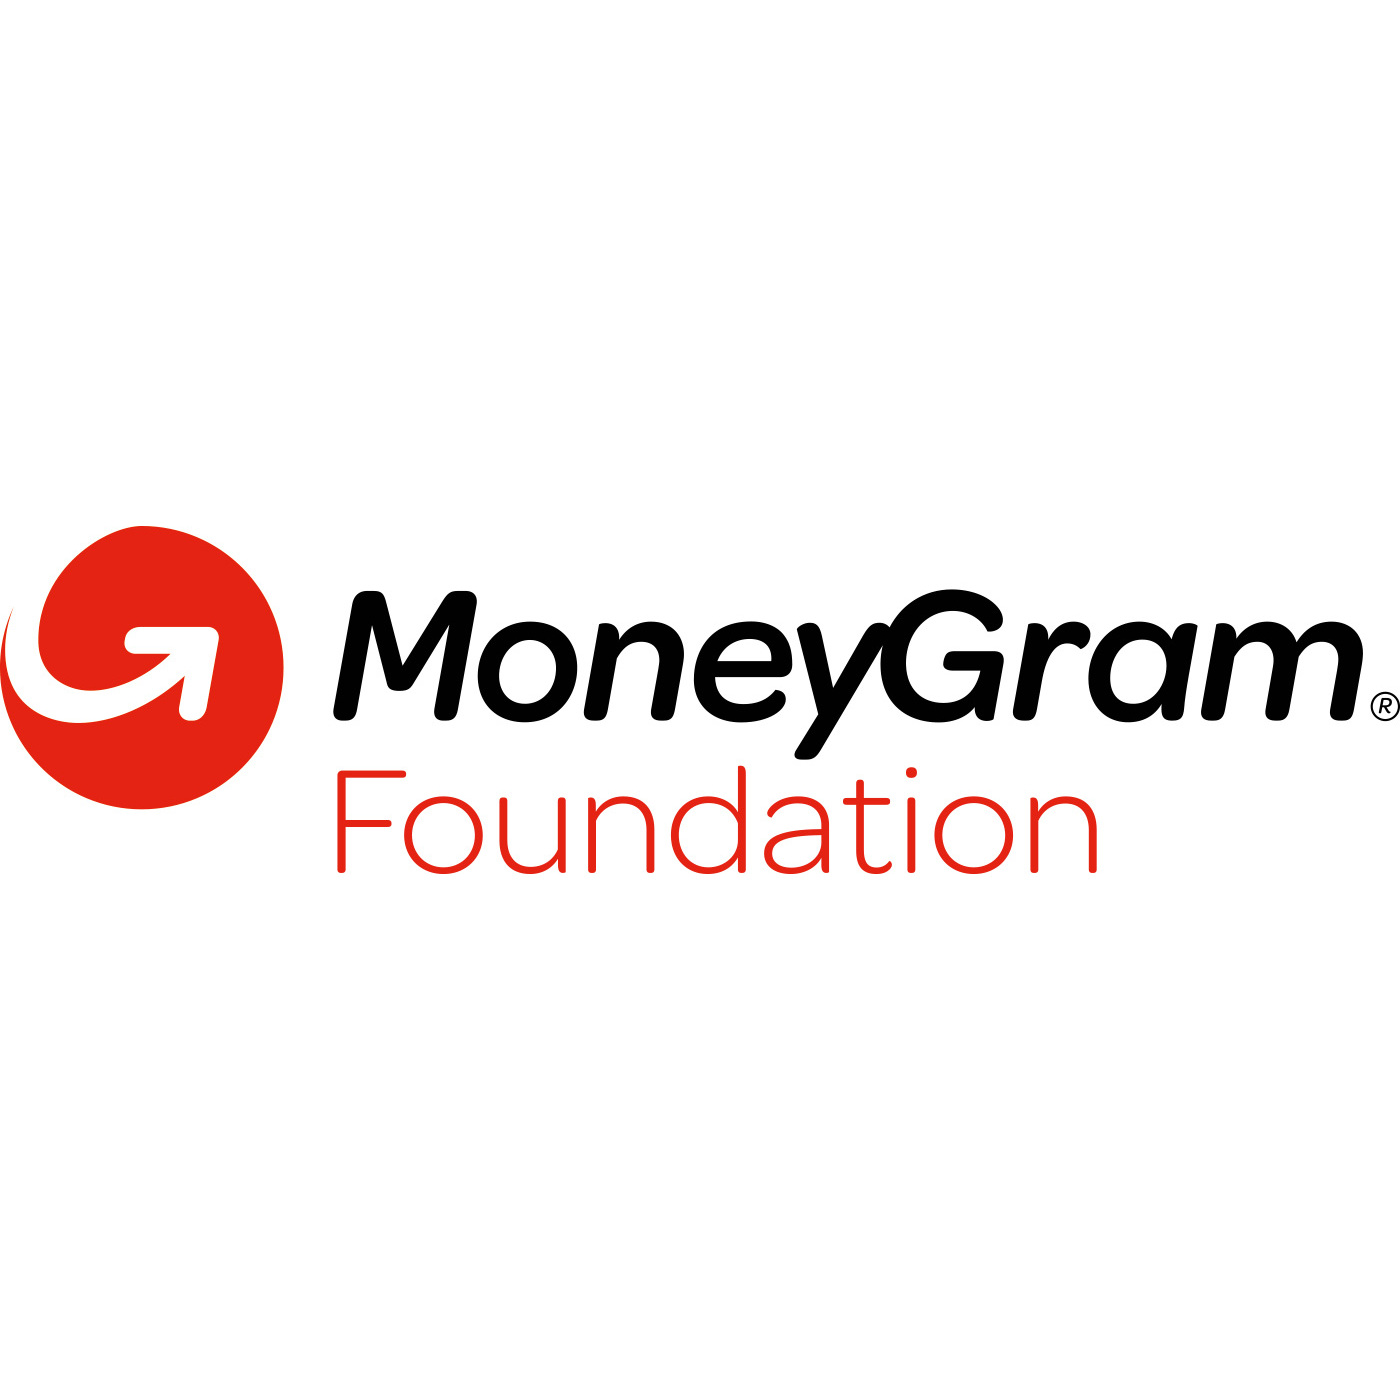 MoneyGram Foundation Kicks Off Literacy Project with The.